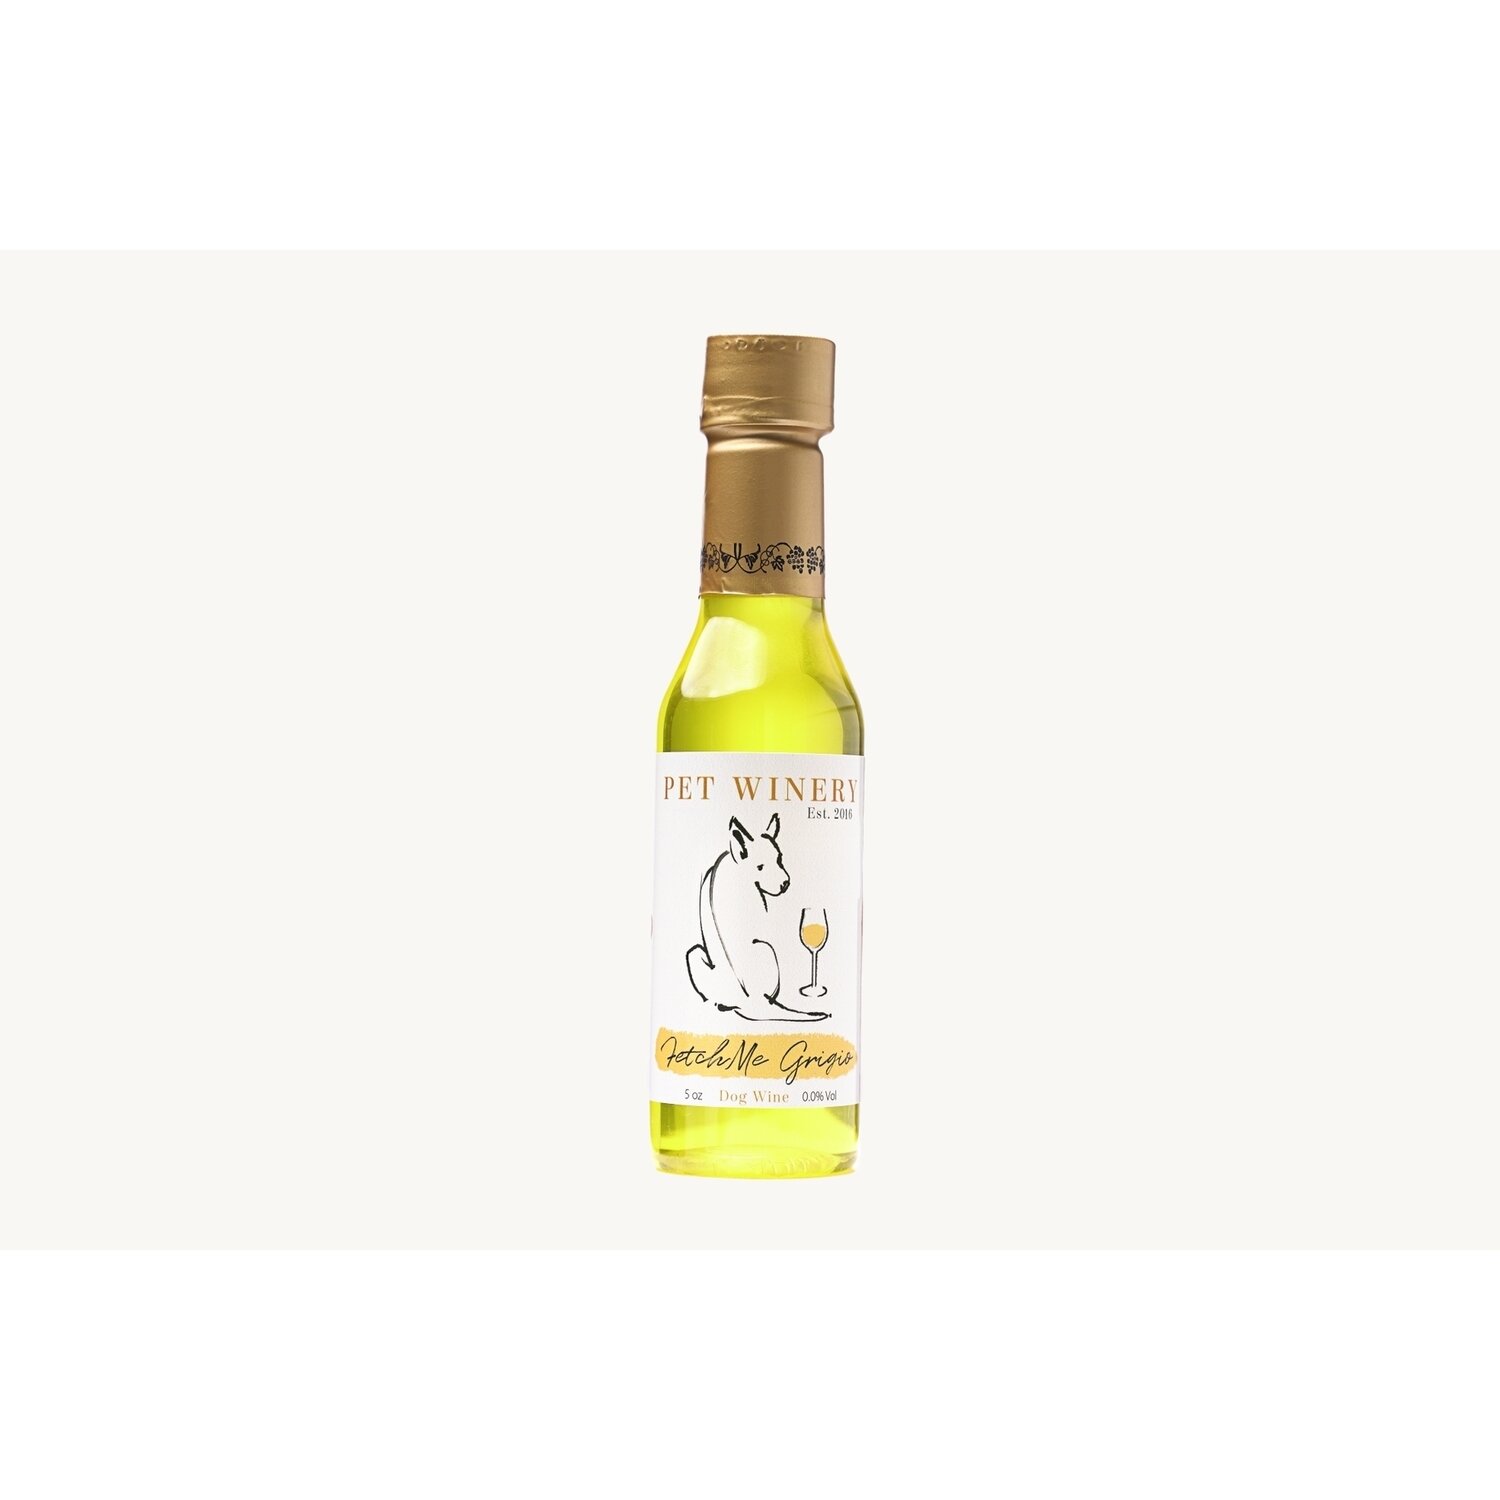 FetchMe Grigio (Yellow Dog Wine)